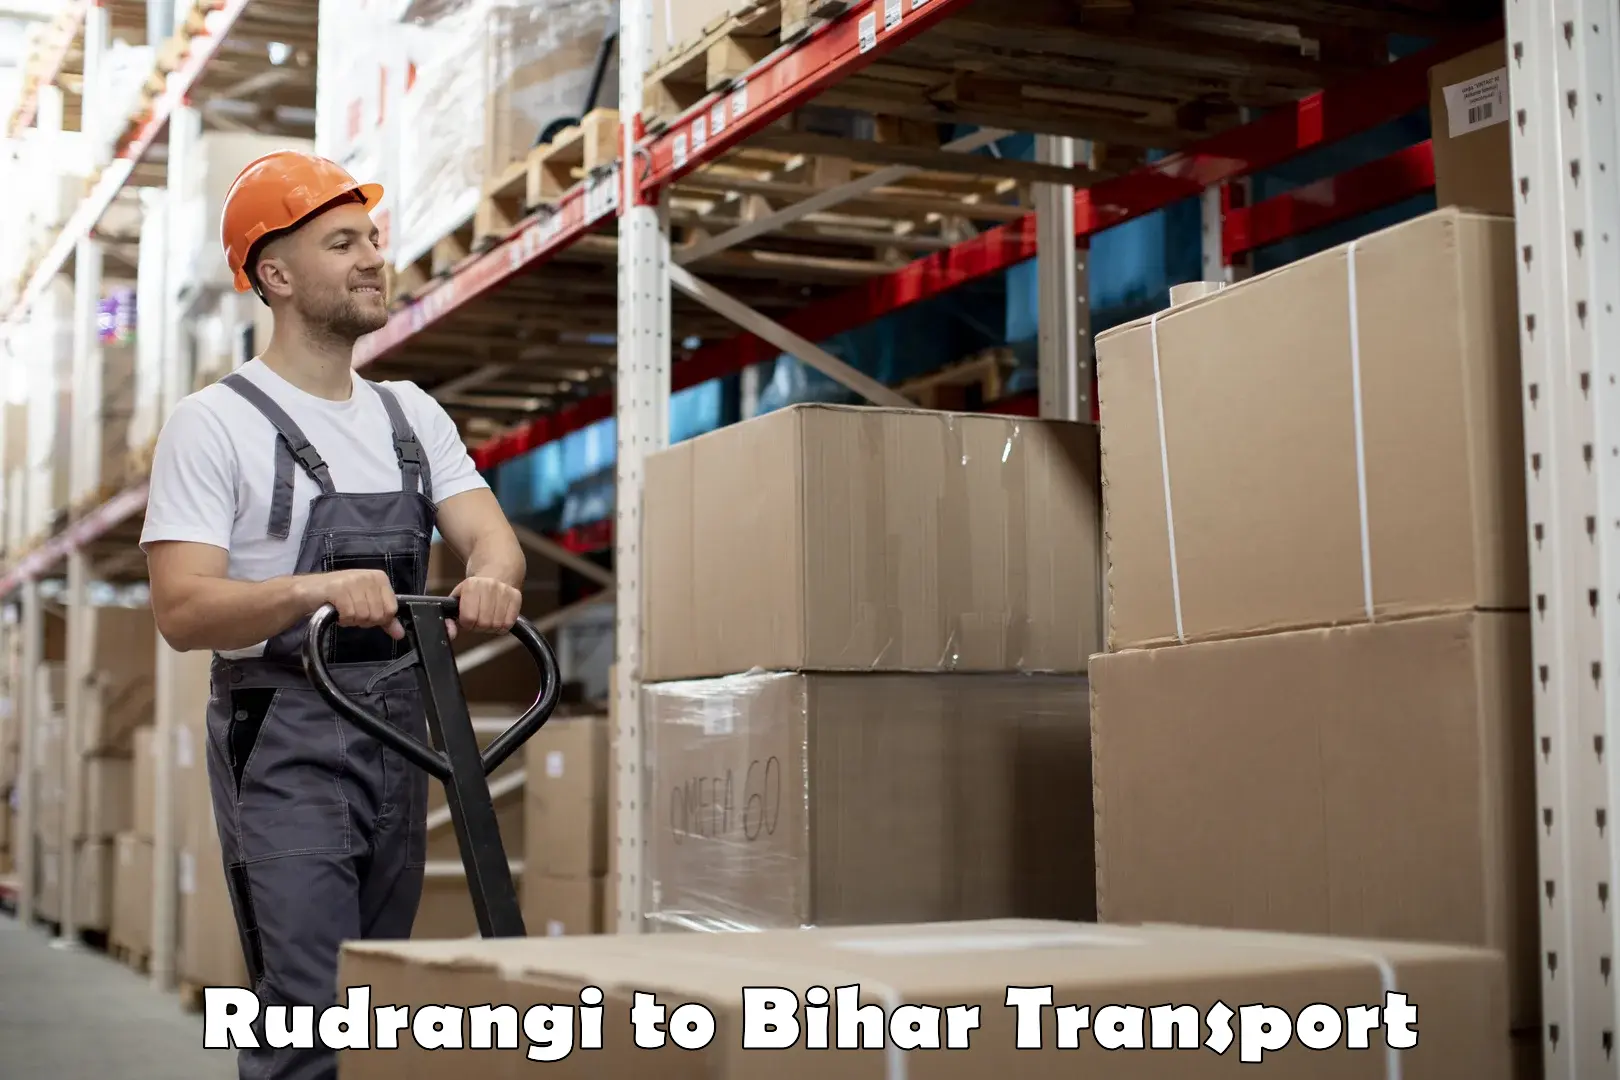 Furniture transport service Rudrangi to Bihar